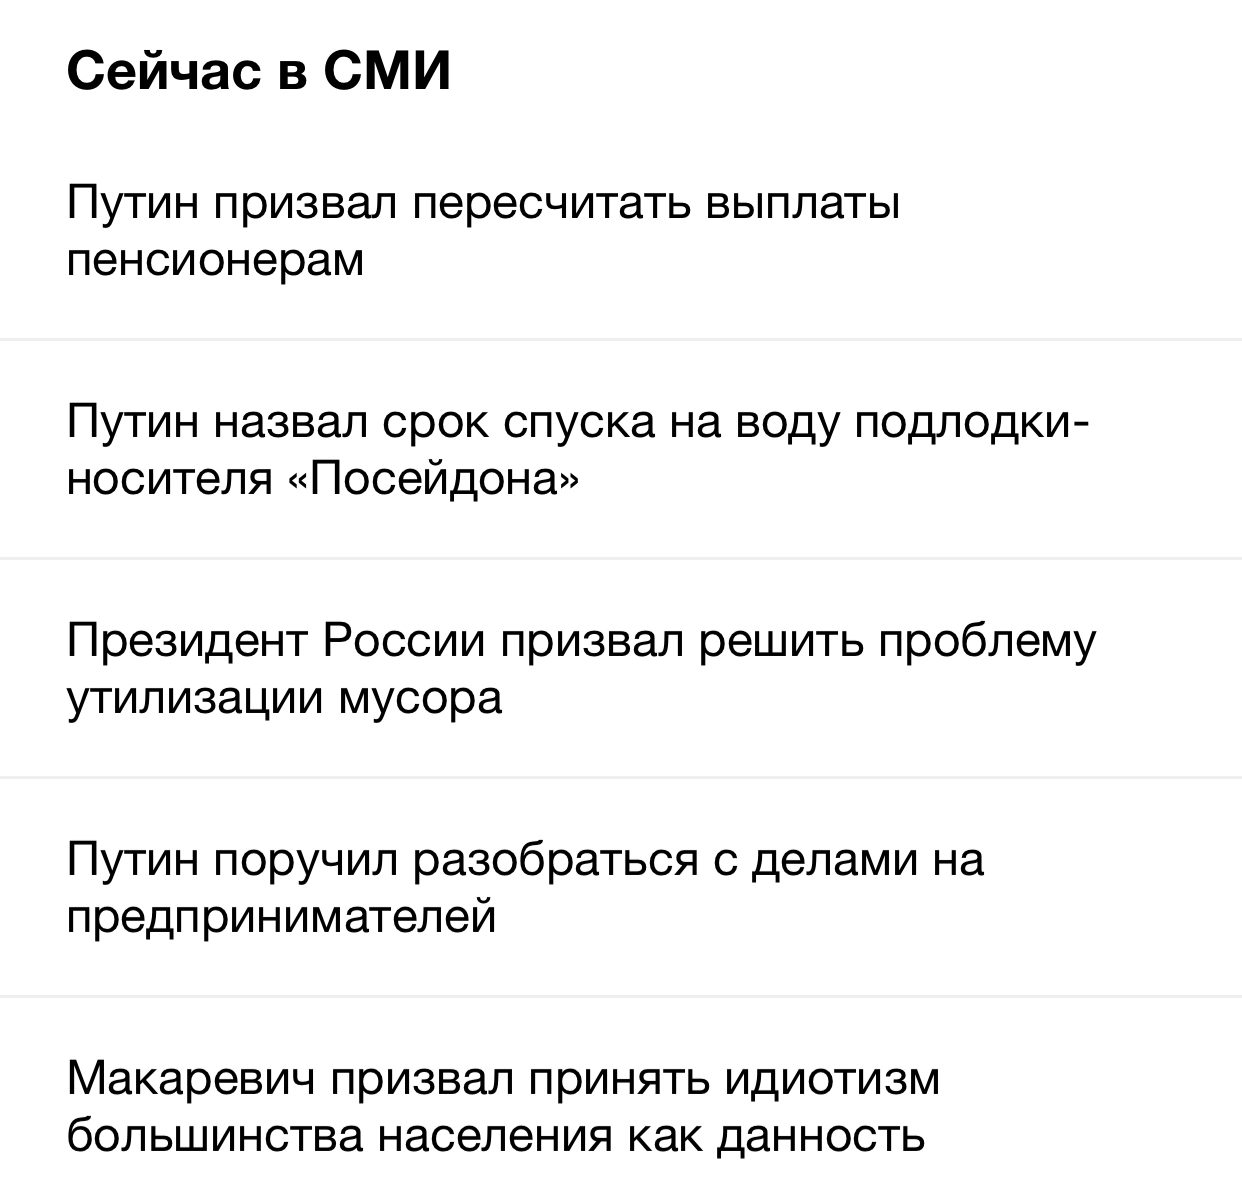 Now in the media.. - The president, Vladimir Putin, Good people, news, Idiocy, Yandex News, Politics